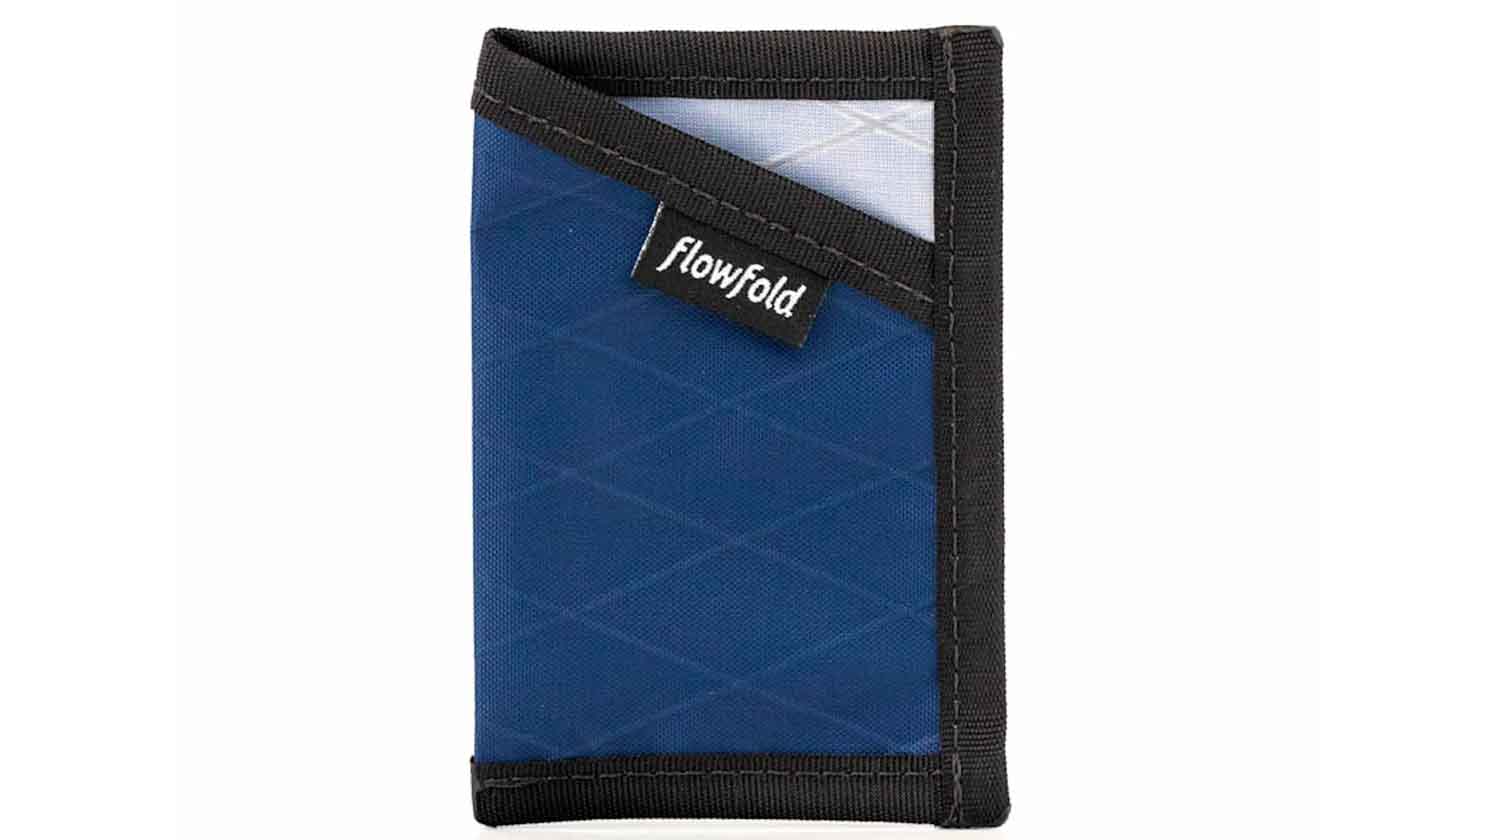 flowfolw minimalist cardholder wallet